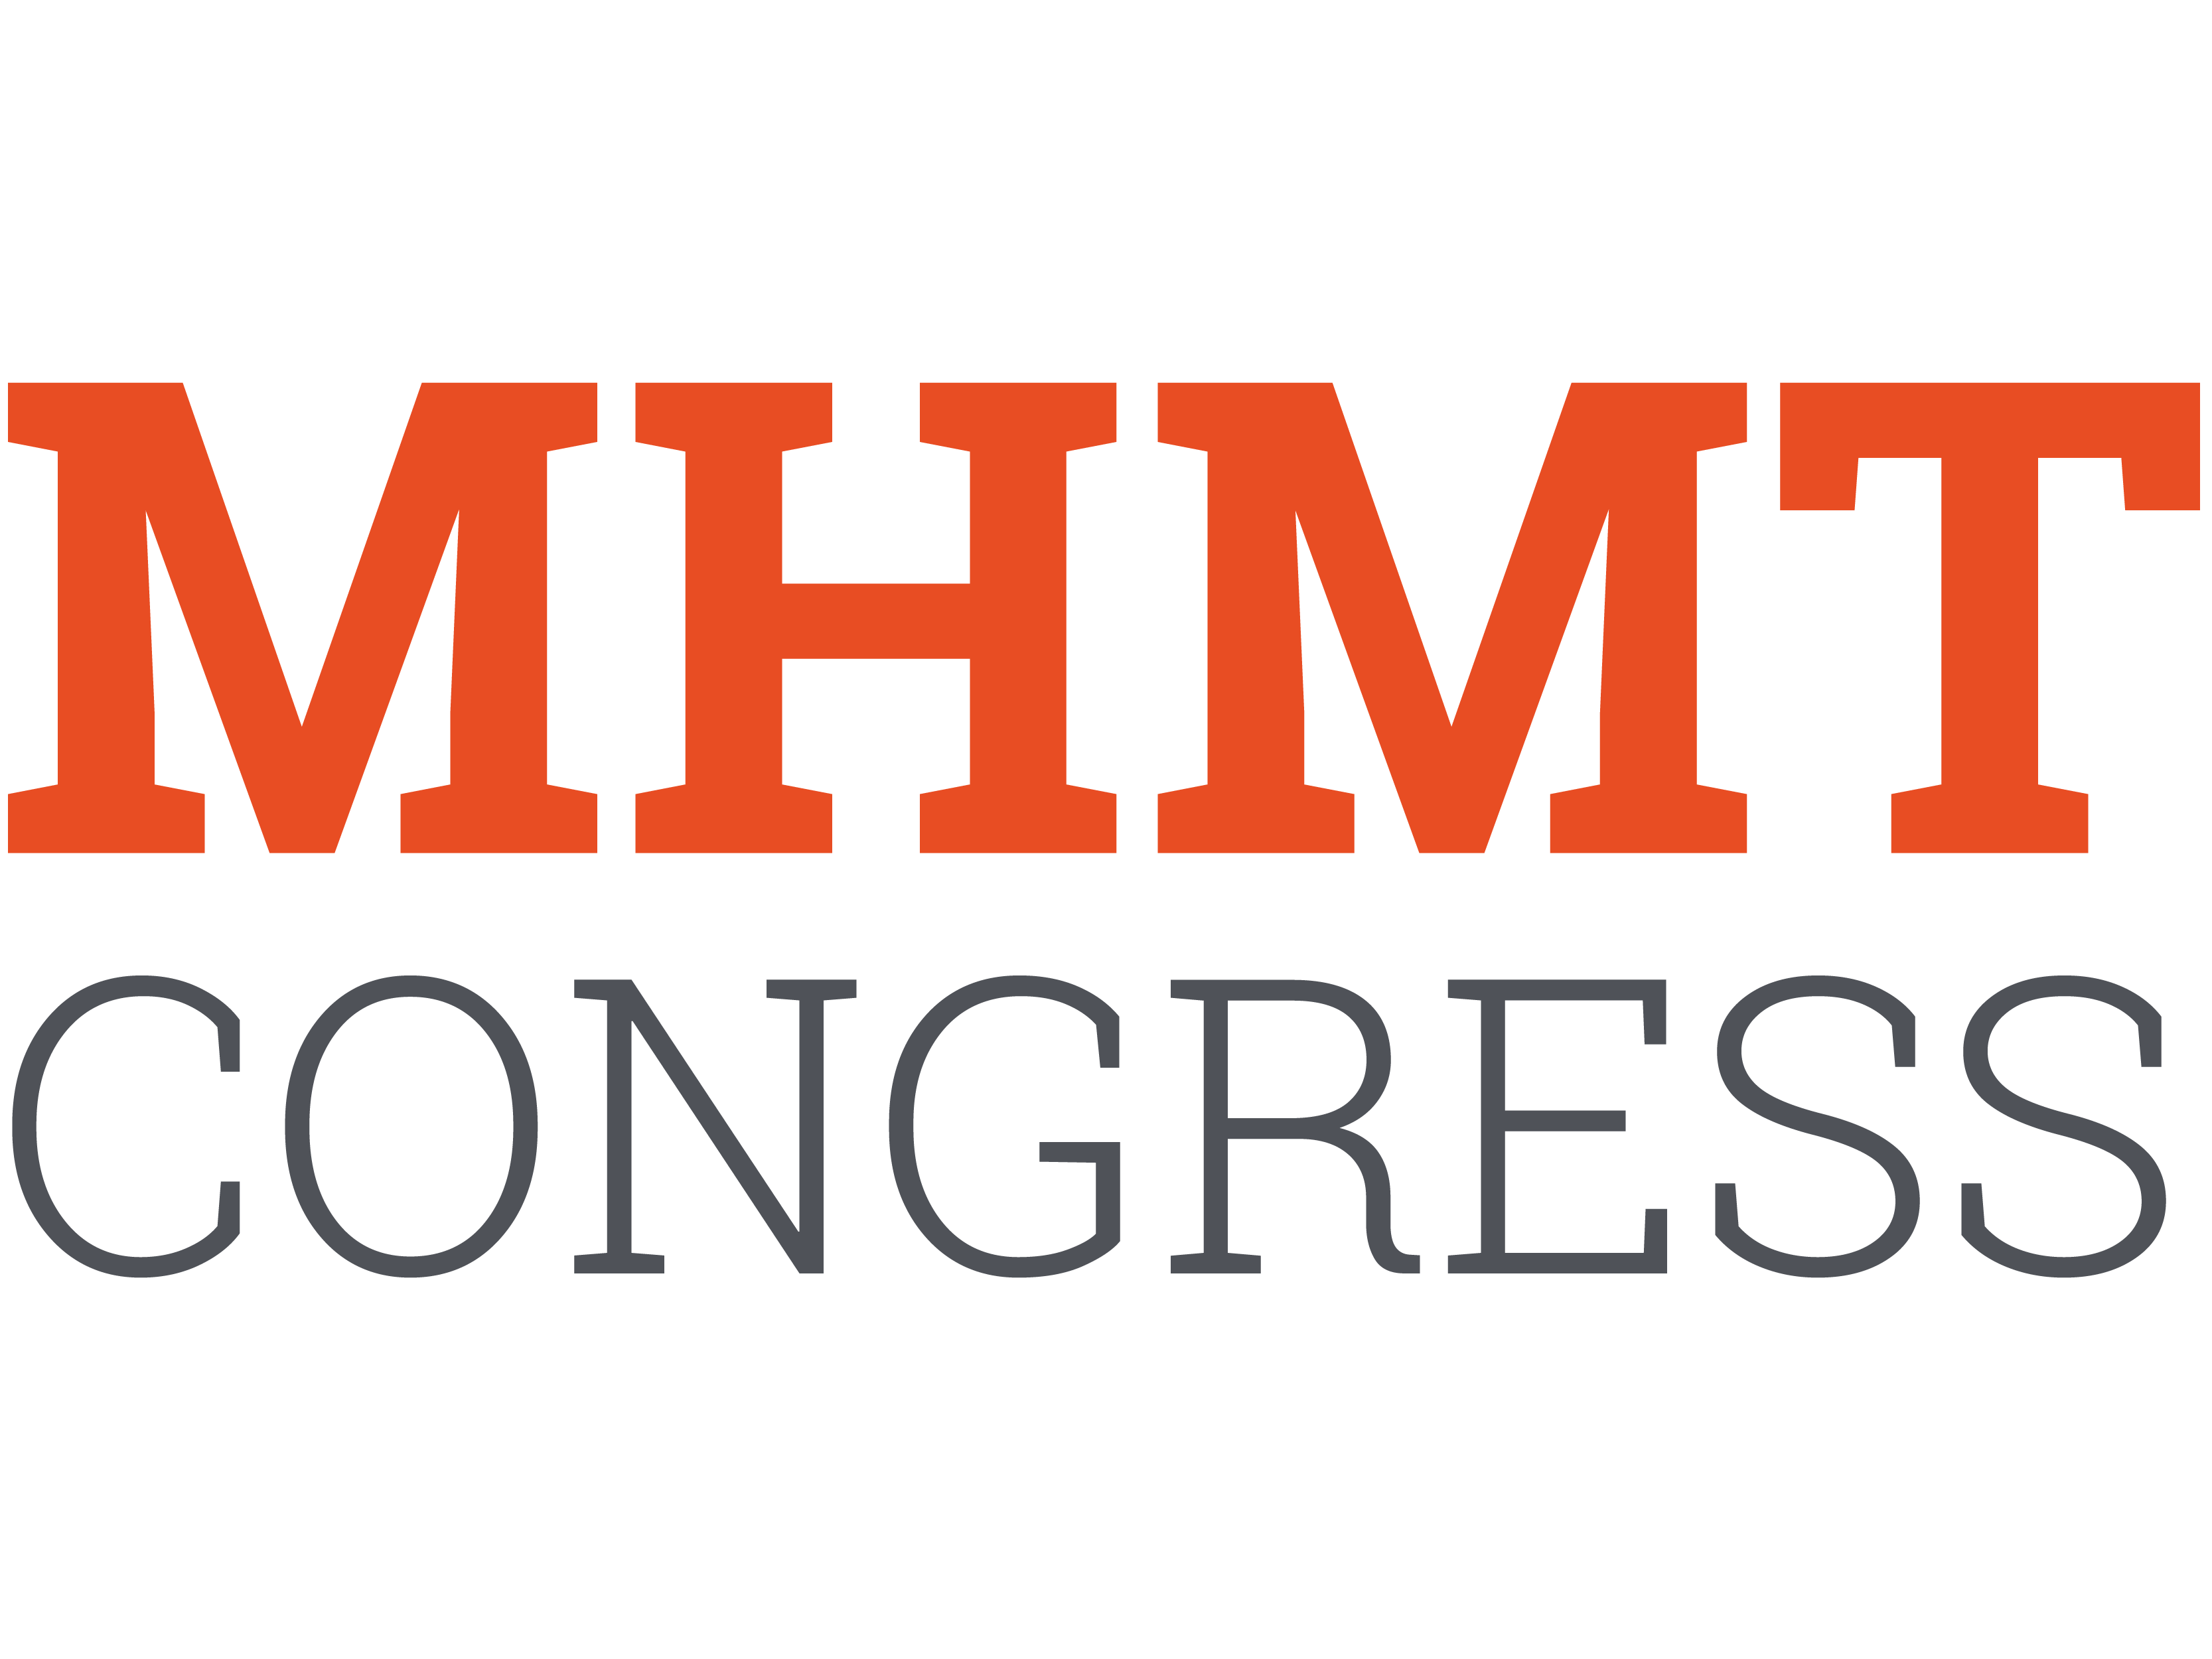 8th World Congress on Momentum, Heat and Mass Transfer (MHMT'23)